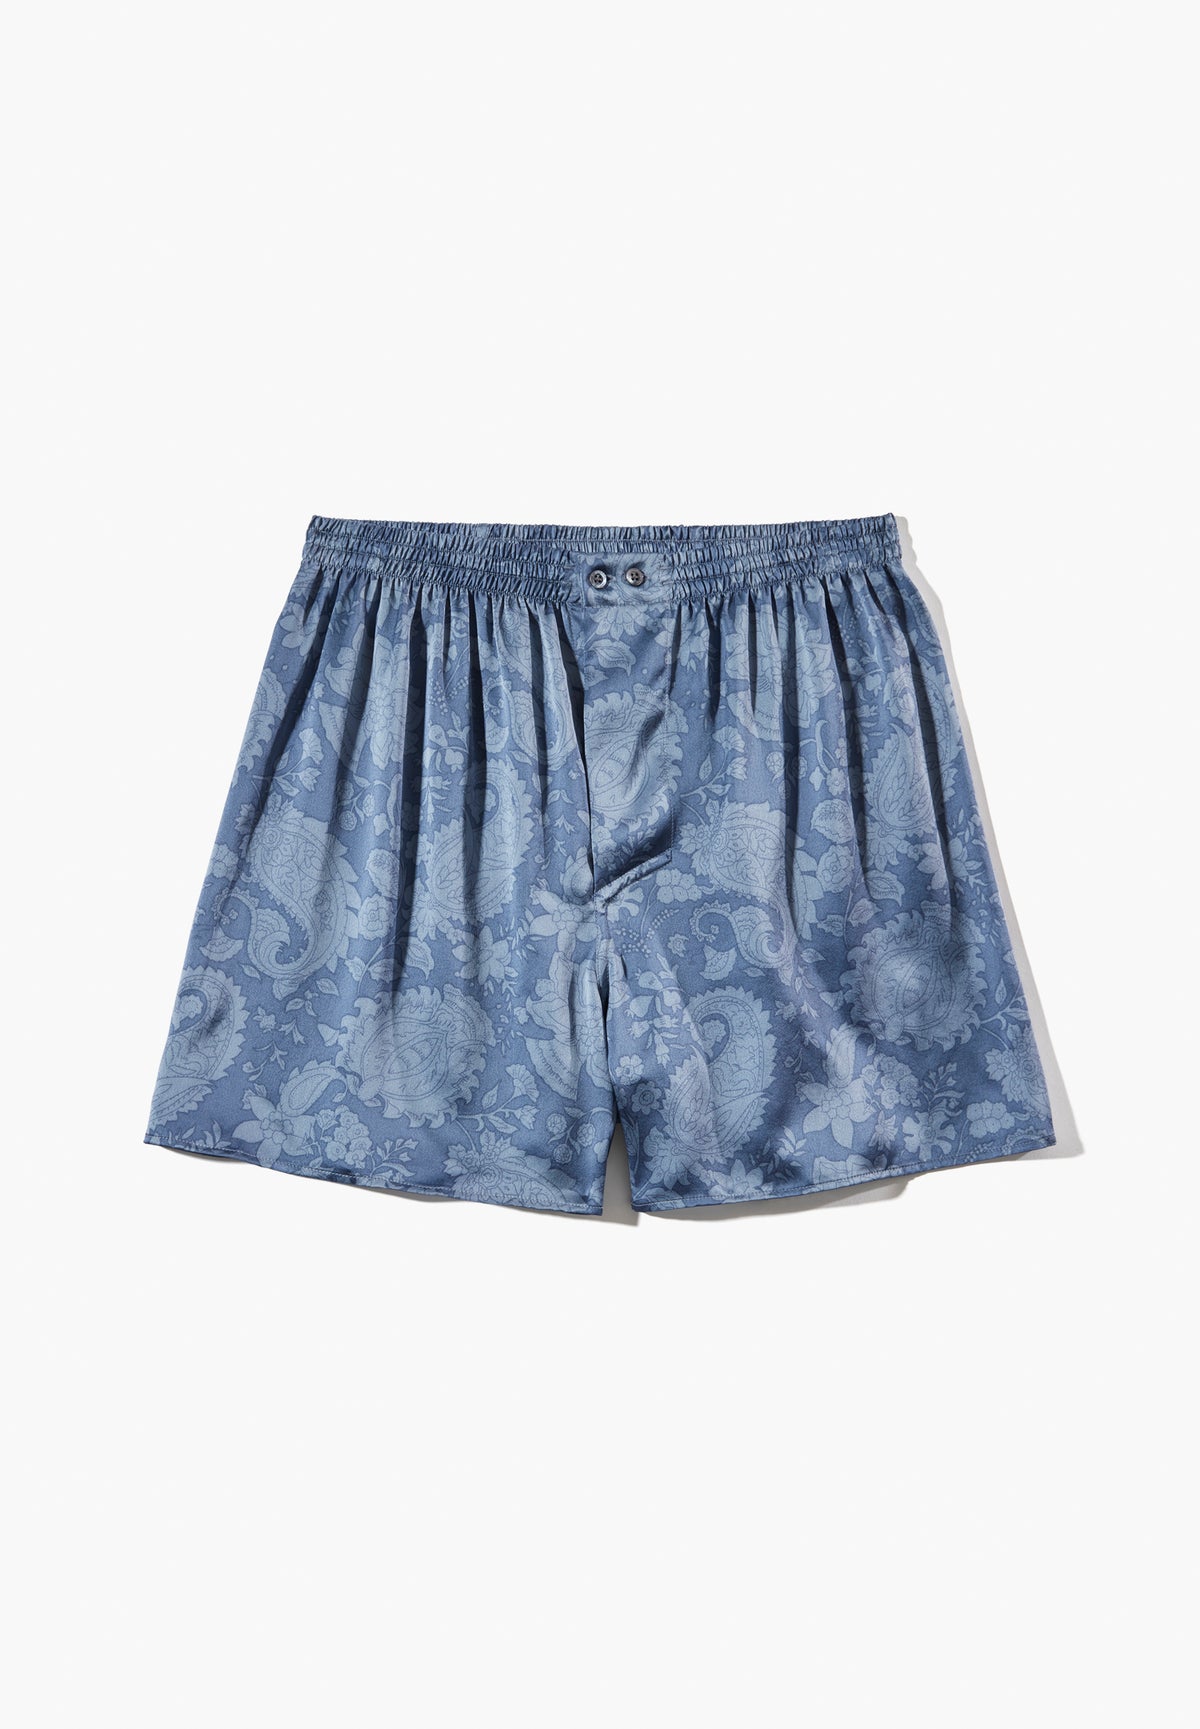 Silk Nightwear | Boxer Shorts - paisley blue